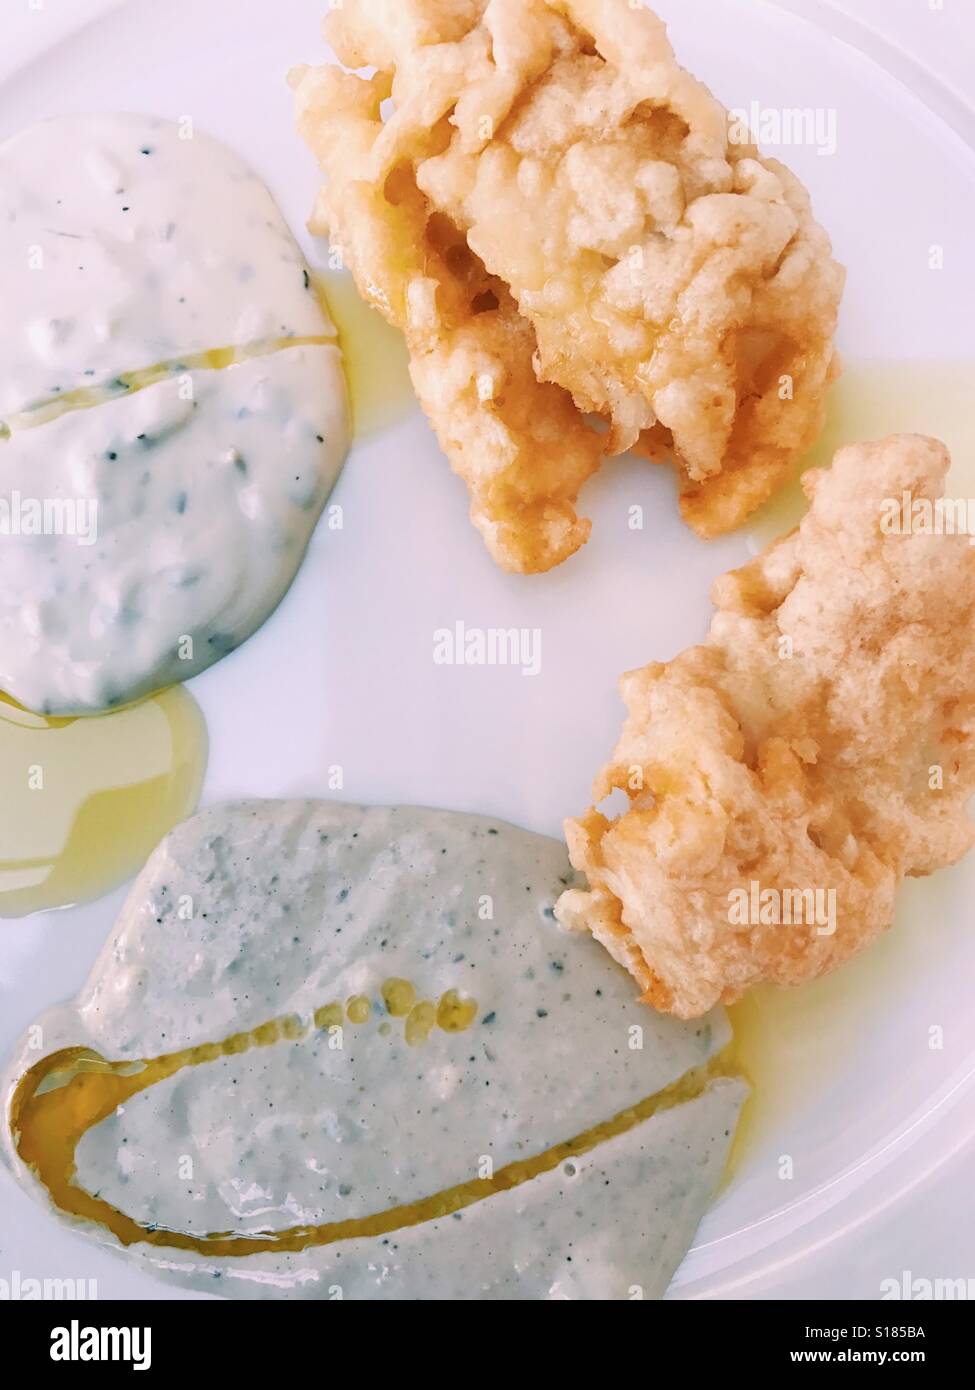 Cod fish in tempura with tartare sauce on plate Stock Photo